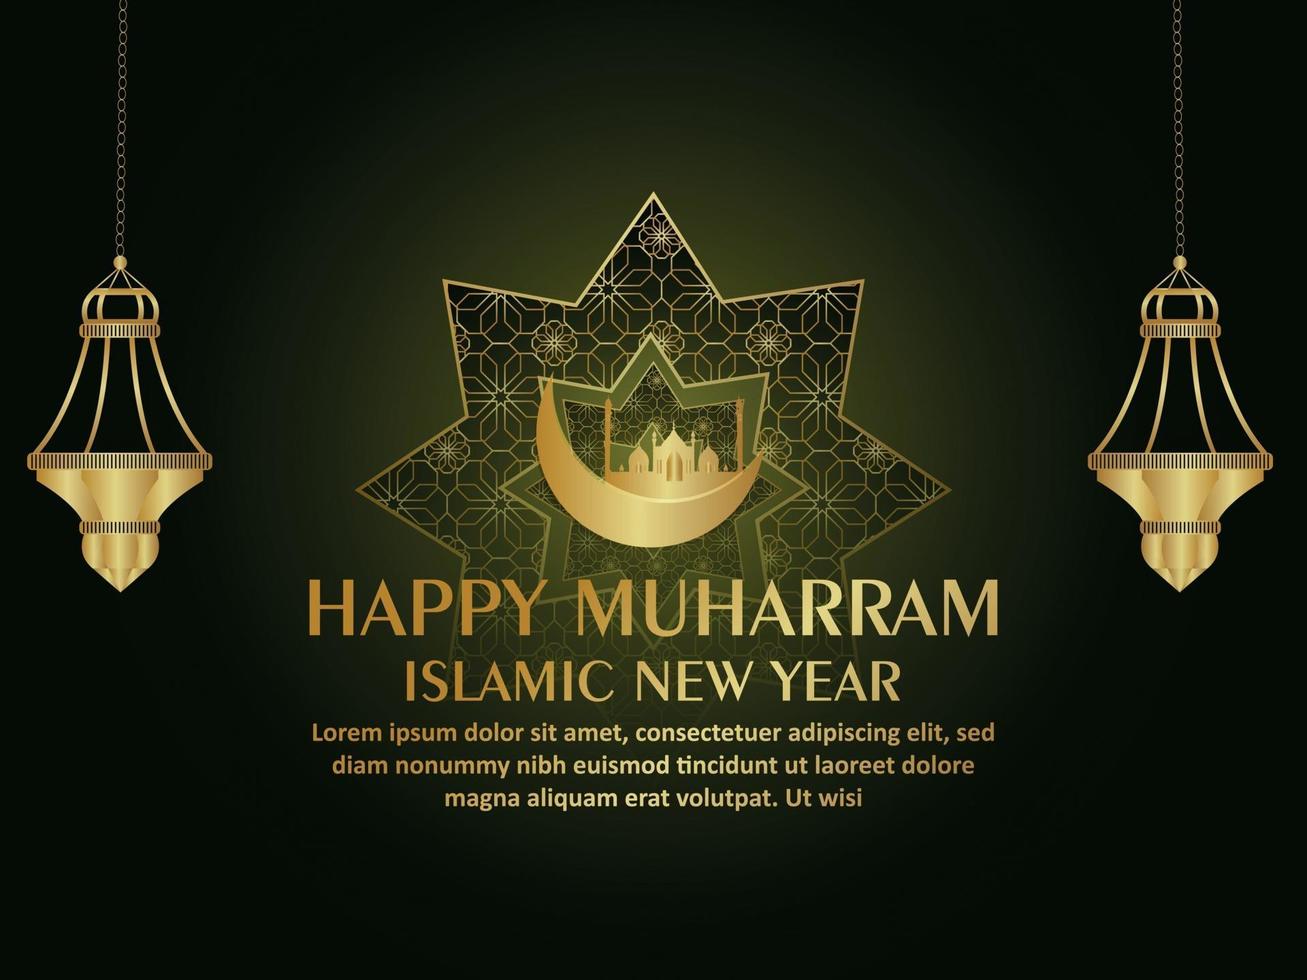 Happy muharram islamic new year celebration background with golden lantern on pattern background vector